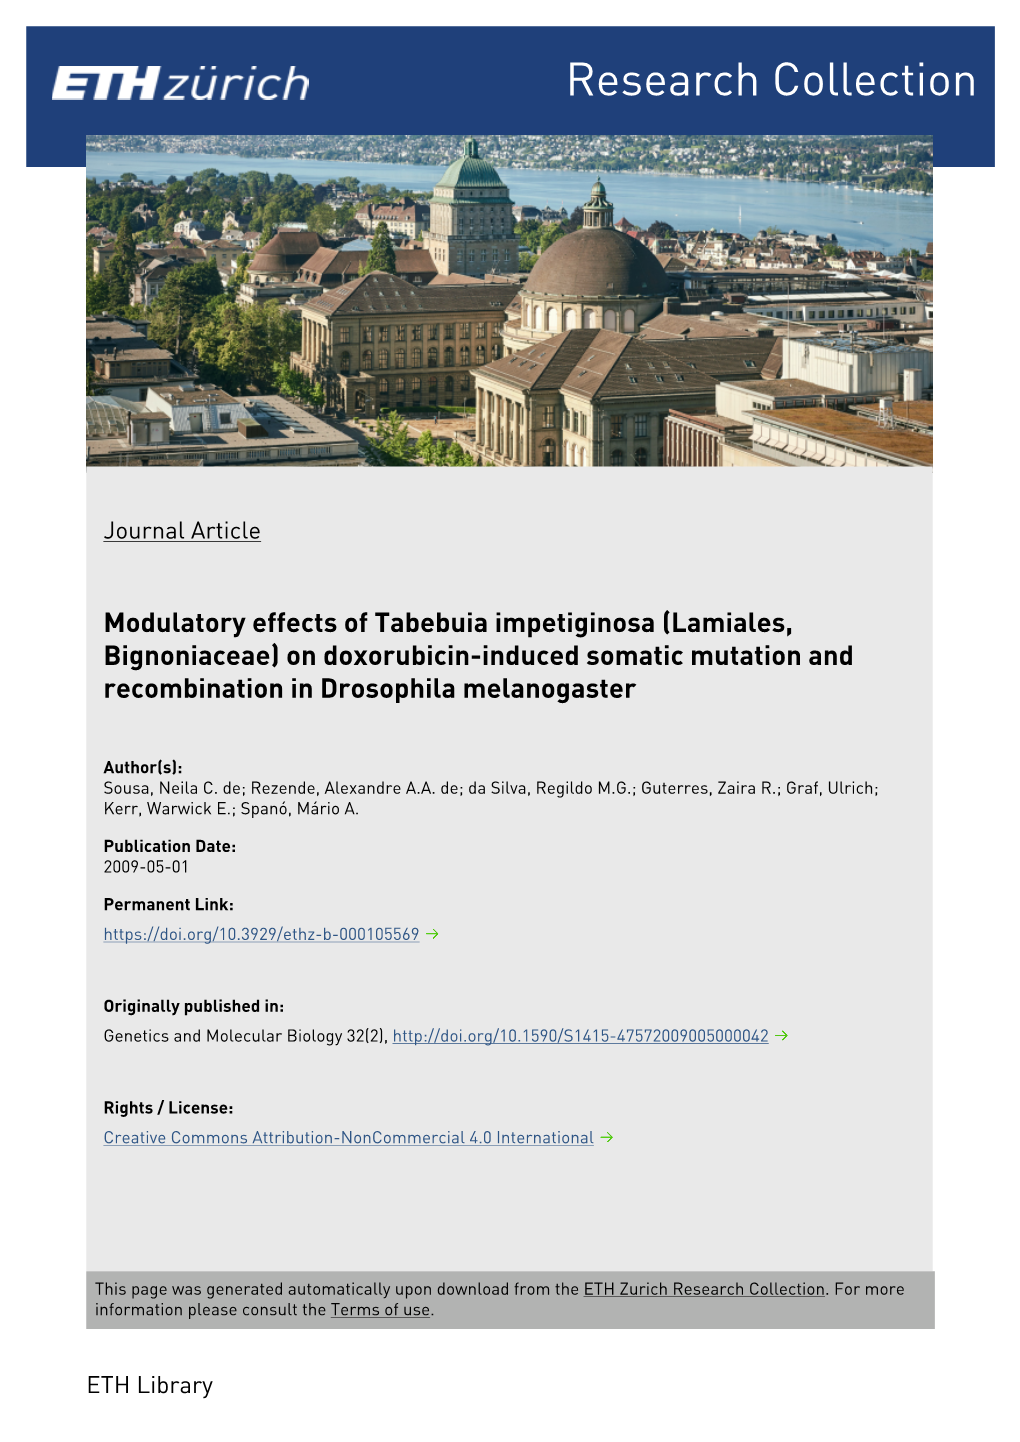 Modulatory Effects of Tabebuia Impetiginosa (Lamiales, Bignoniaceae) on Doxorubicin-Induced Somatic Mutation and Recombination in Drosophila Melanogaster